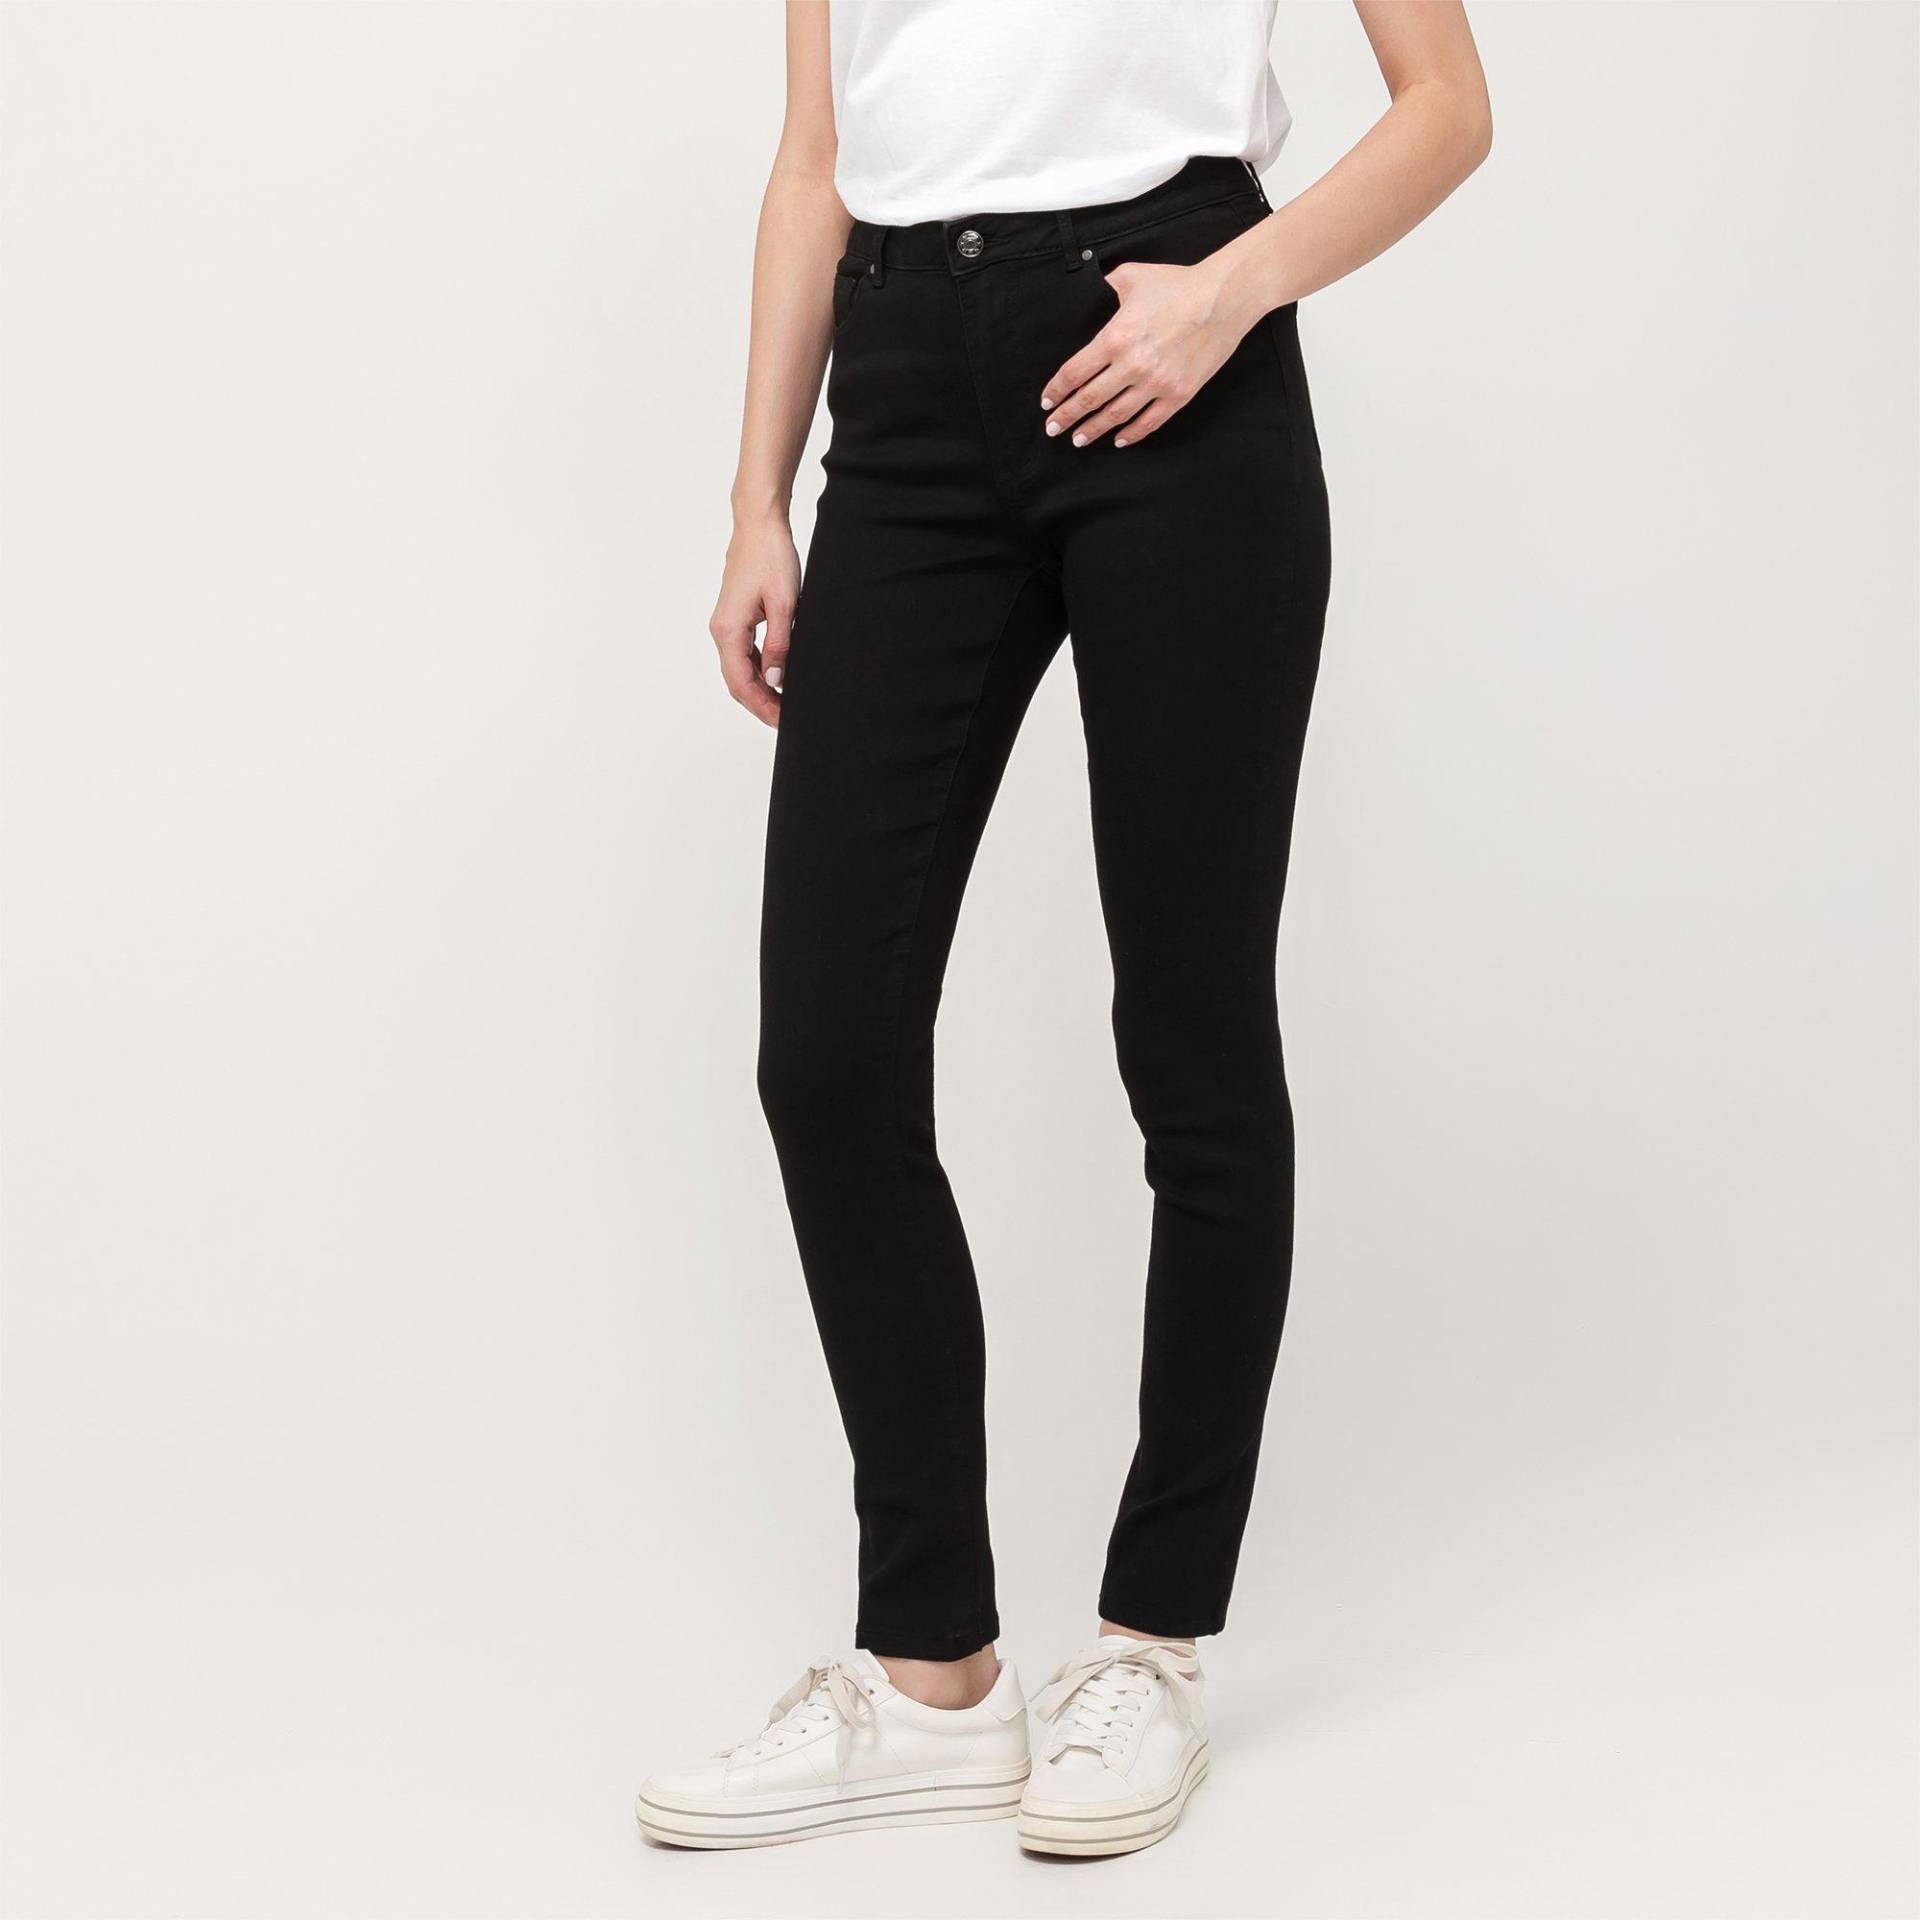 Jeans, Slim Fit Damen Black L30/W40 von Manor Woman